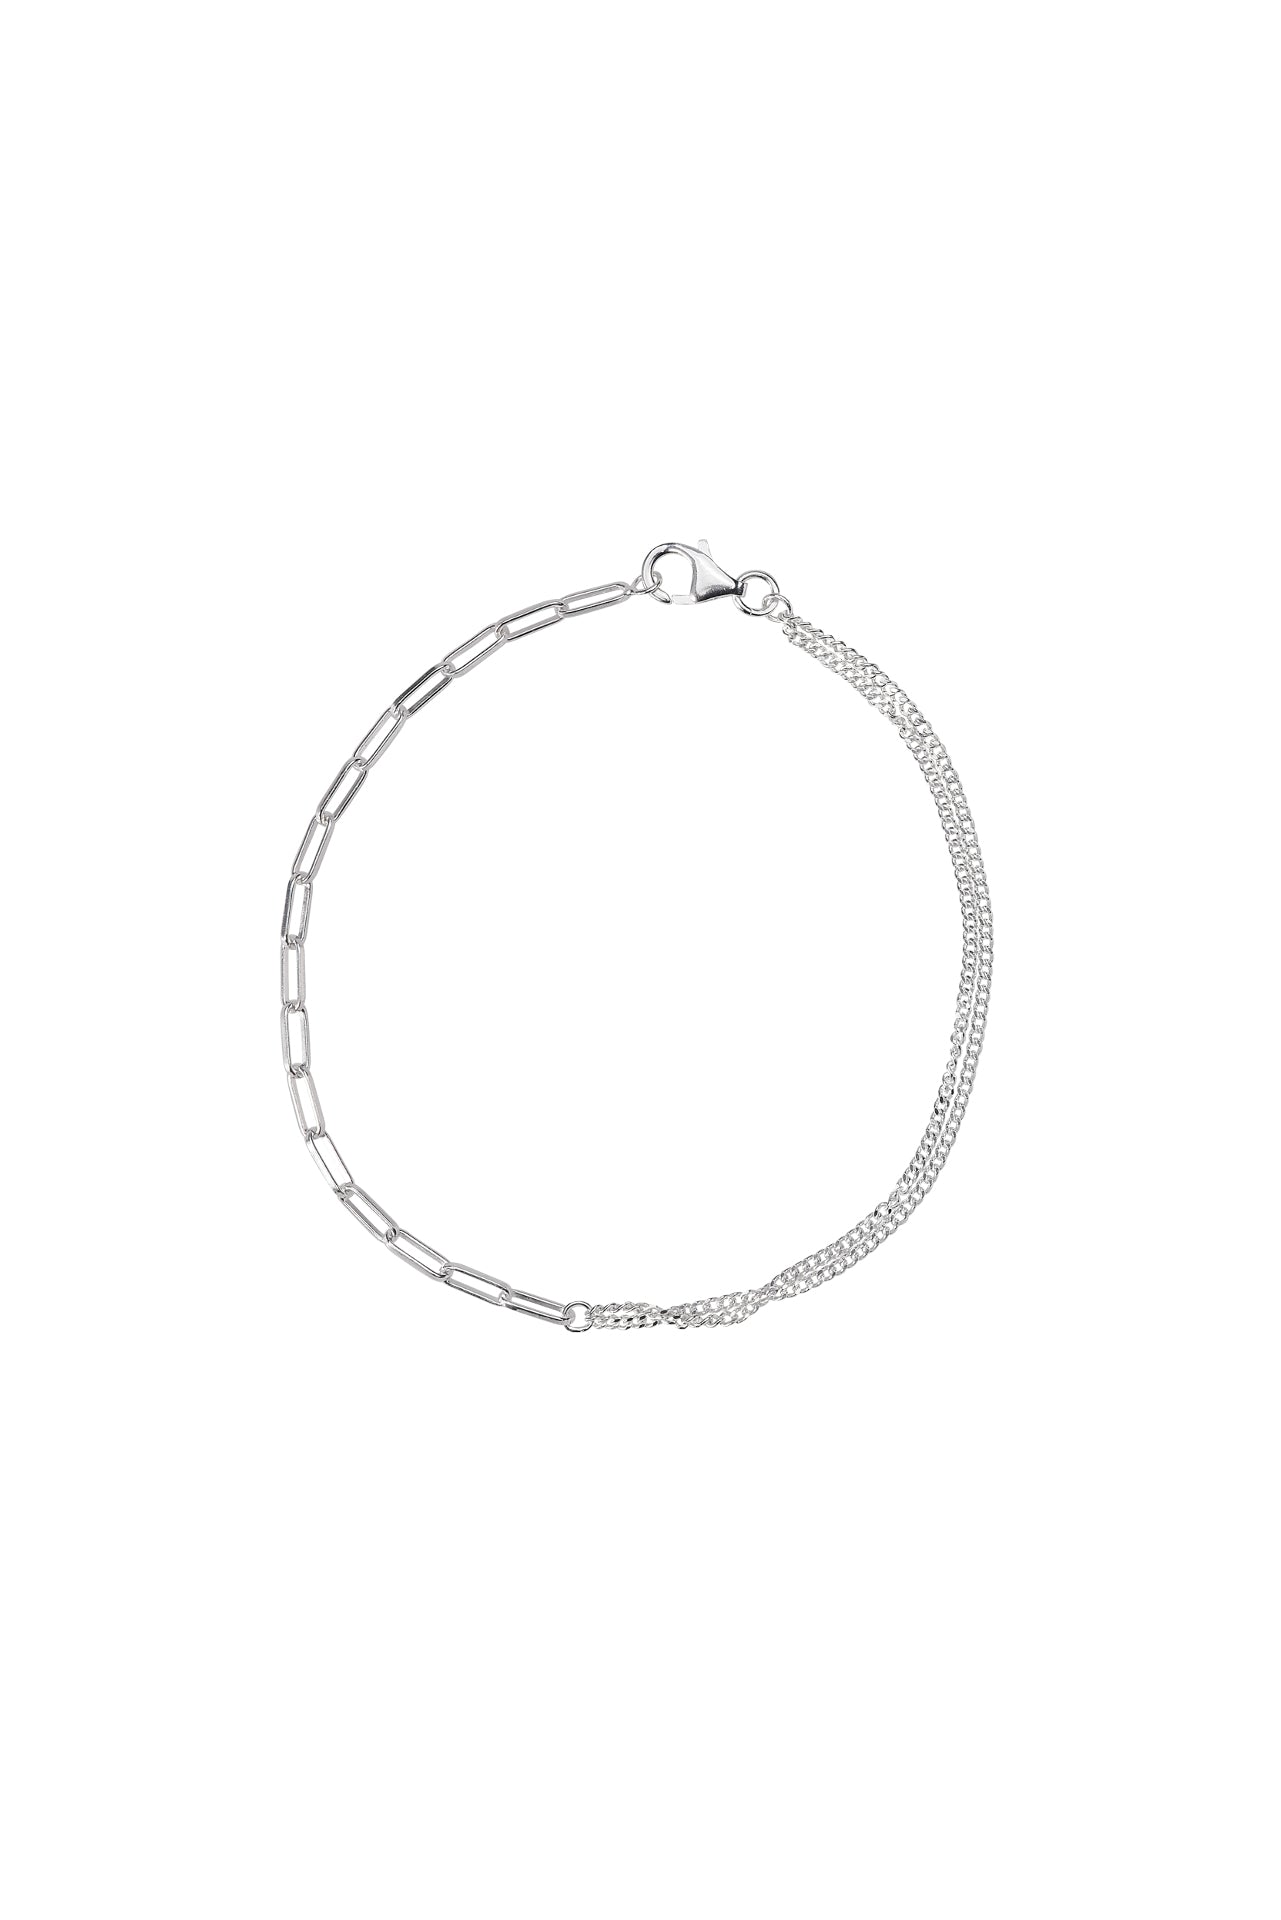 Xzota | Armbanden | Double chain | Zilver